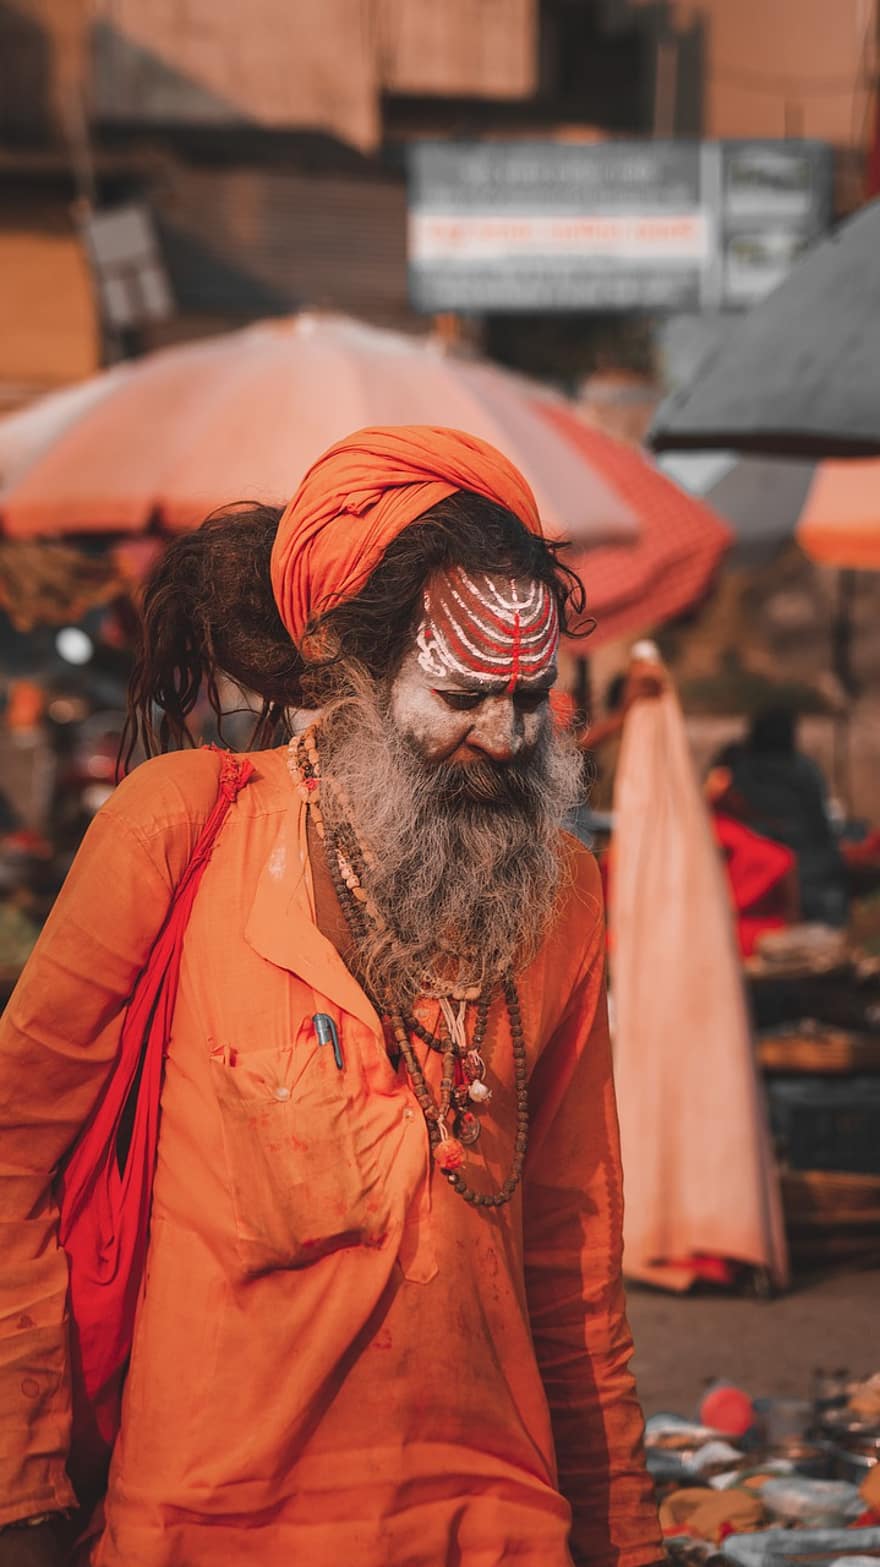 aghori, Shaiva Sadhus, laki-laki, budaya, budaya asli, satu orang, serban, jenggot, budaya India, dewasa, pakaian tradisional